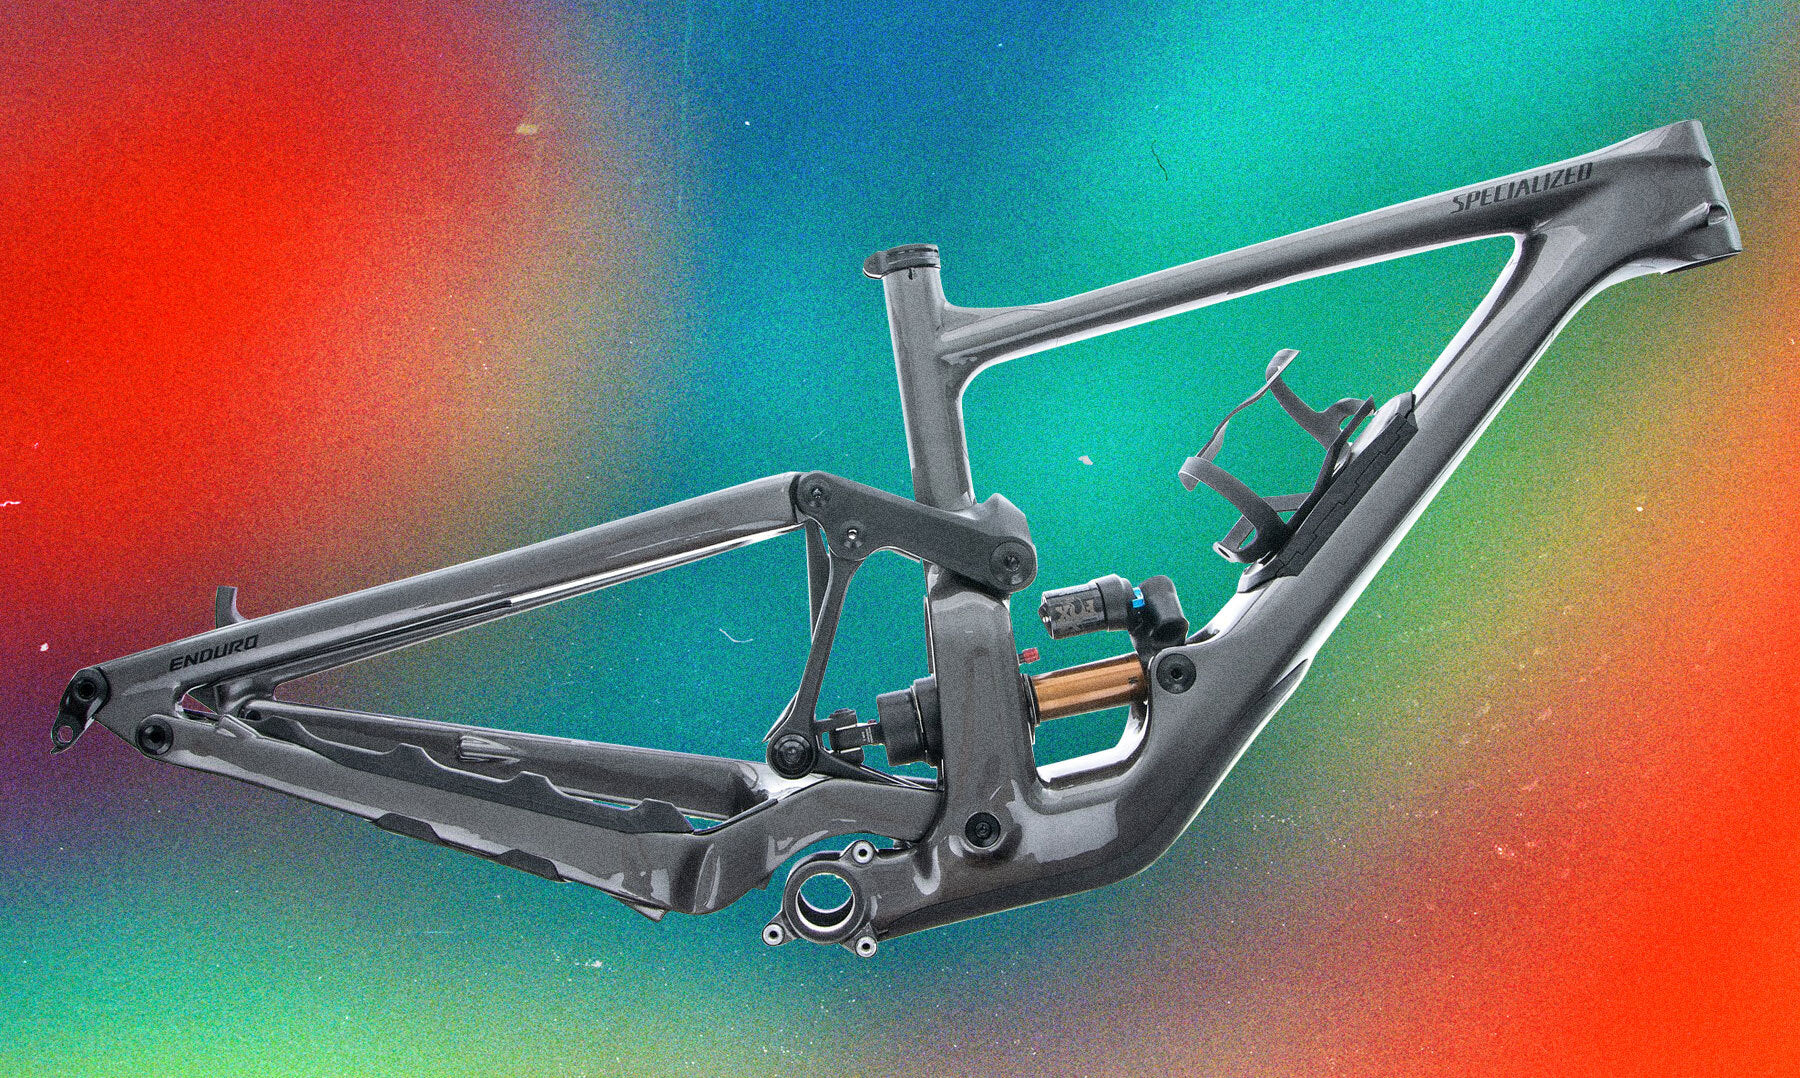 Specialized Enduro dream bike build